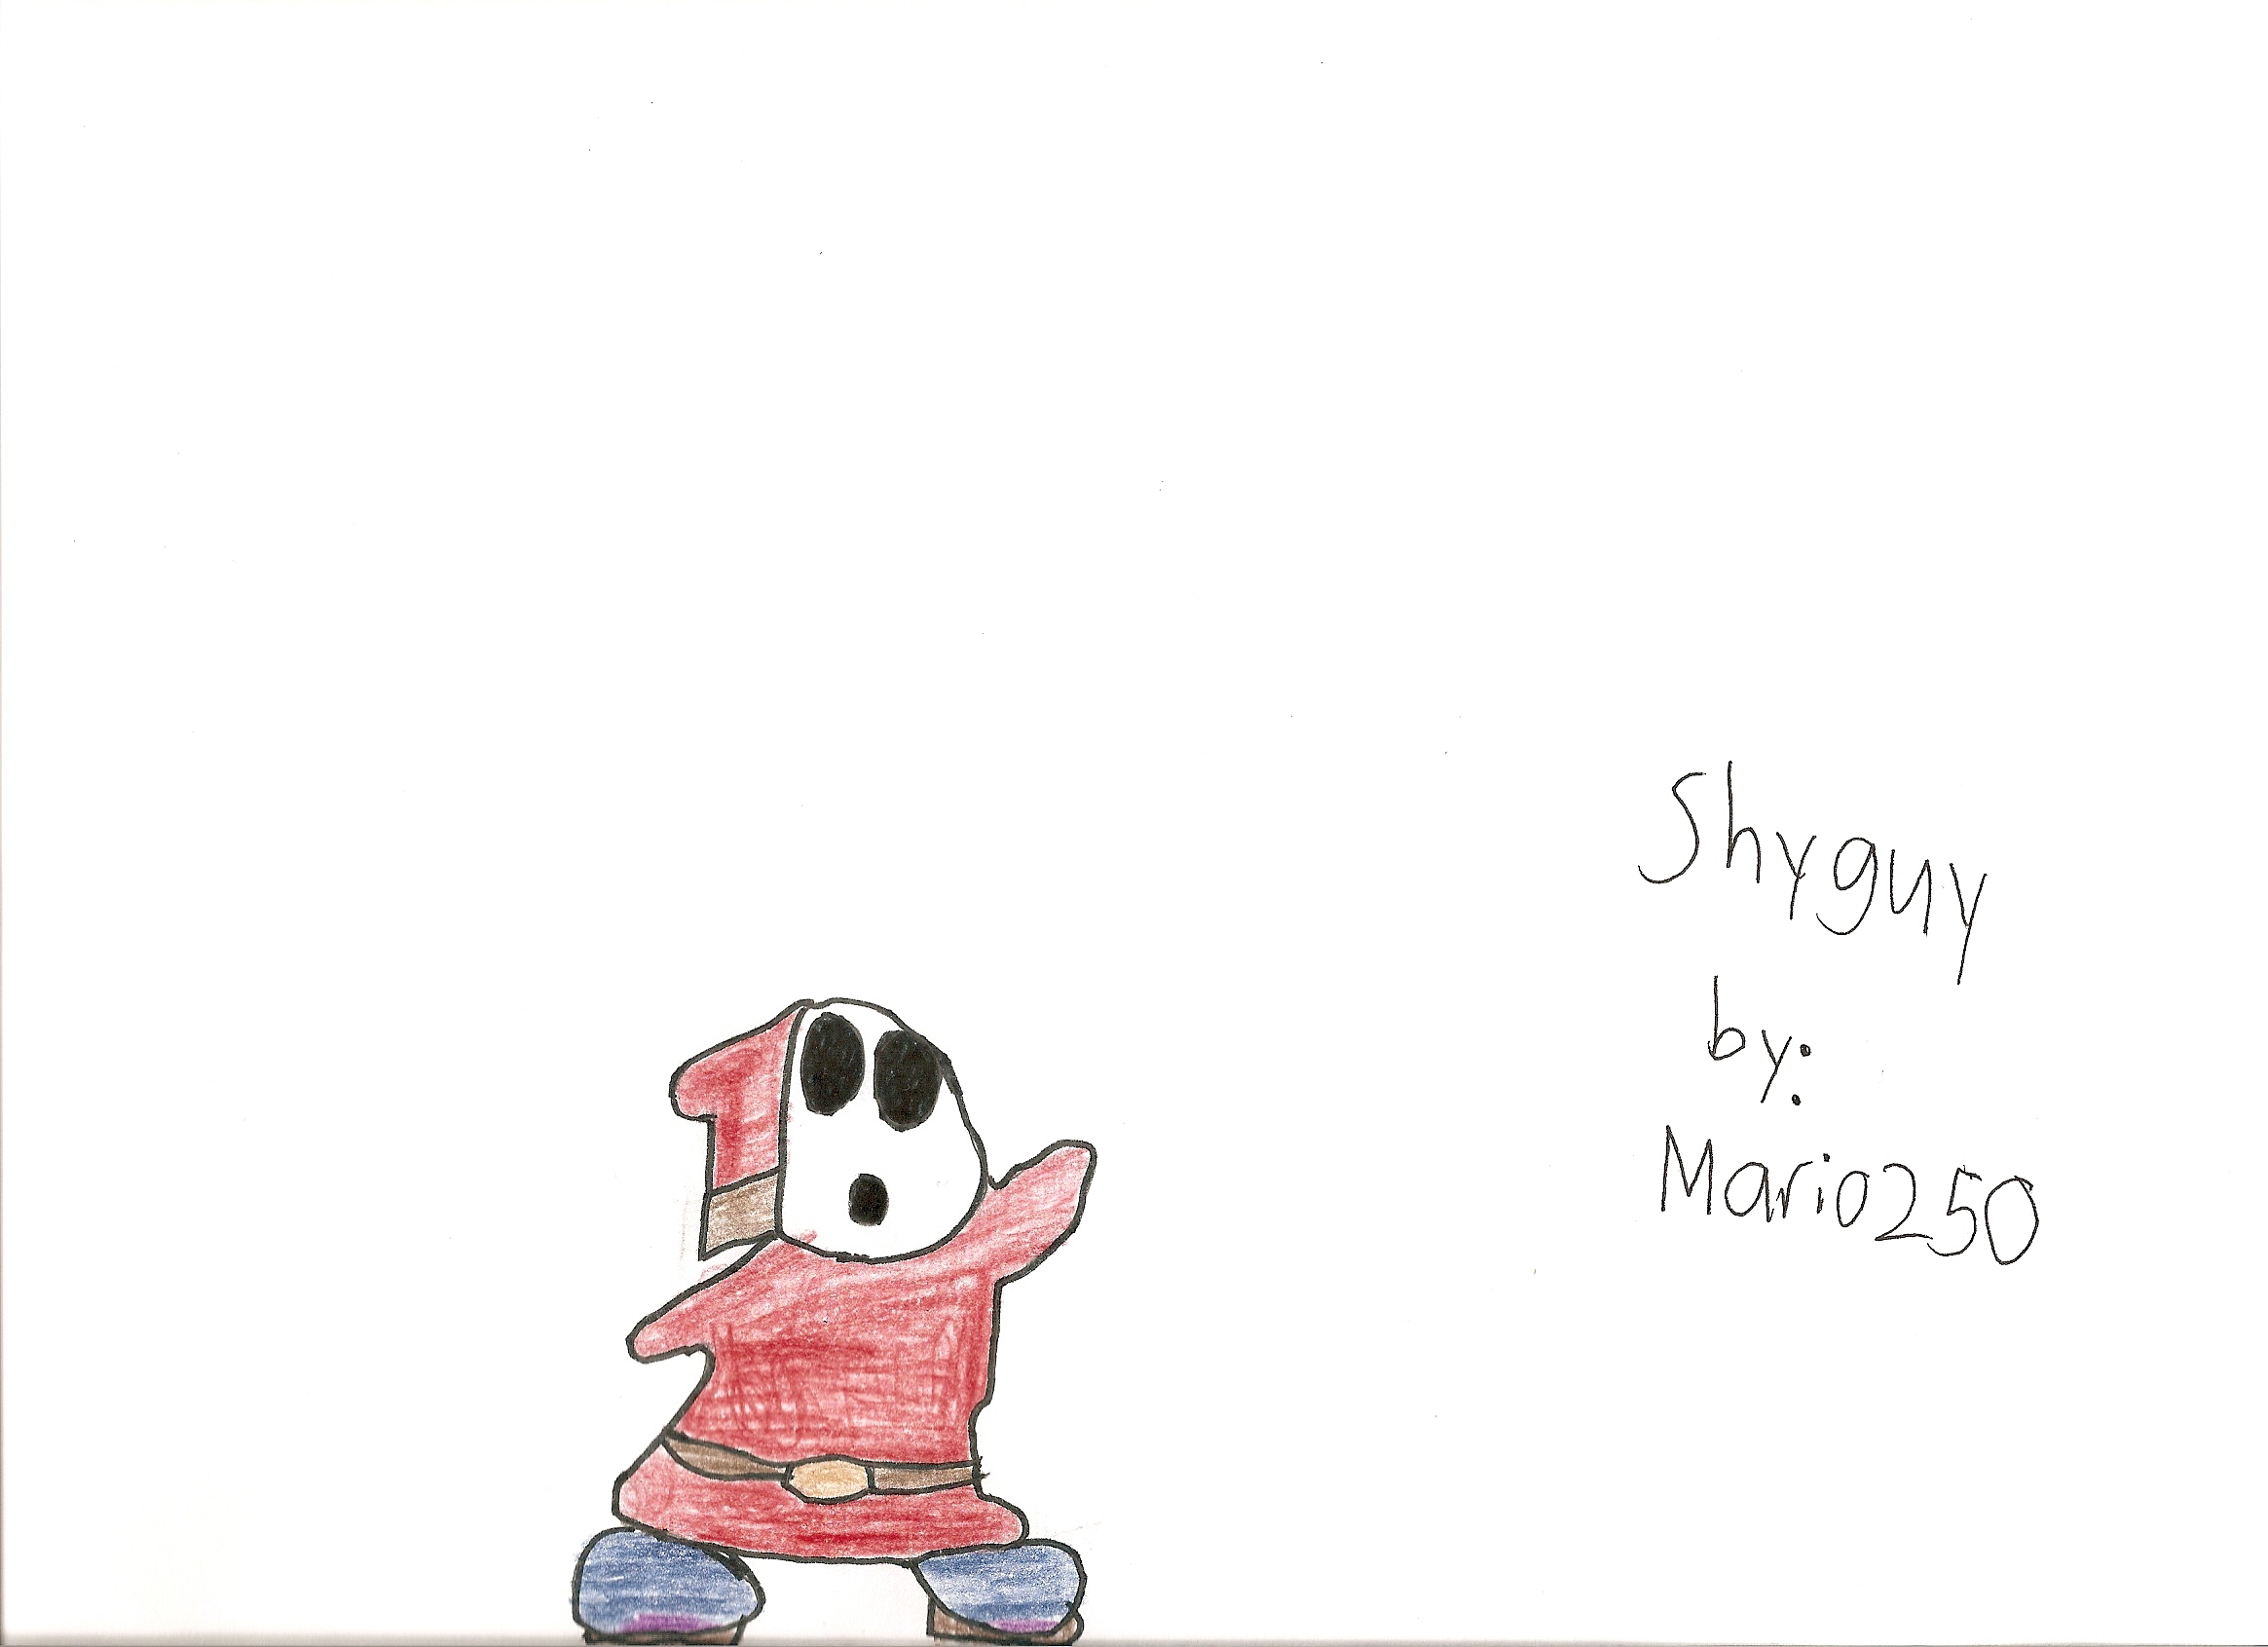 Shy guy by Mario250